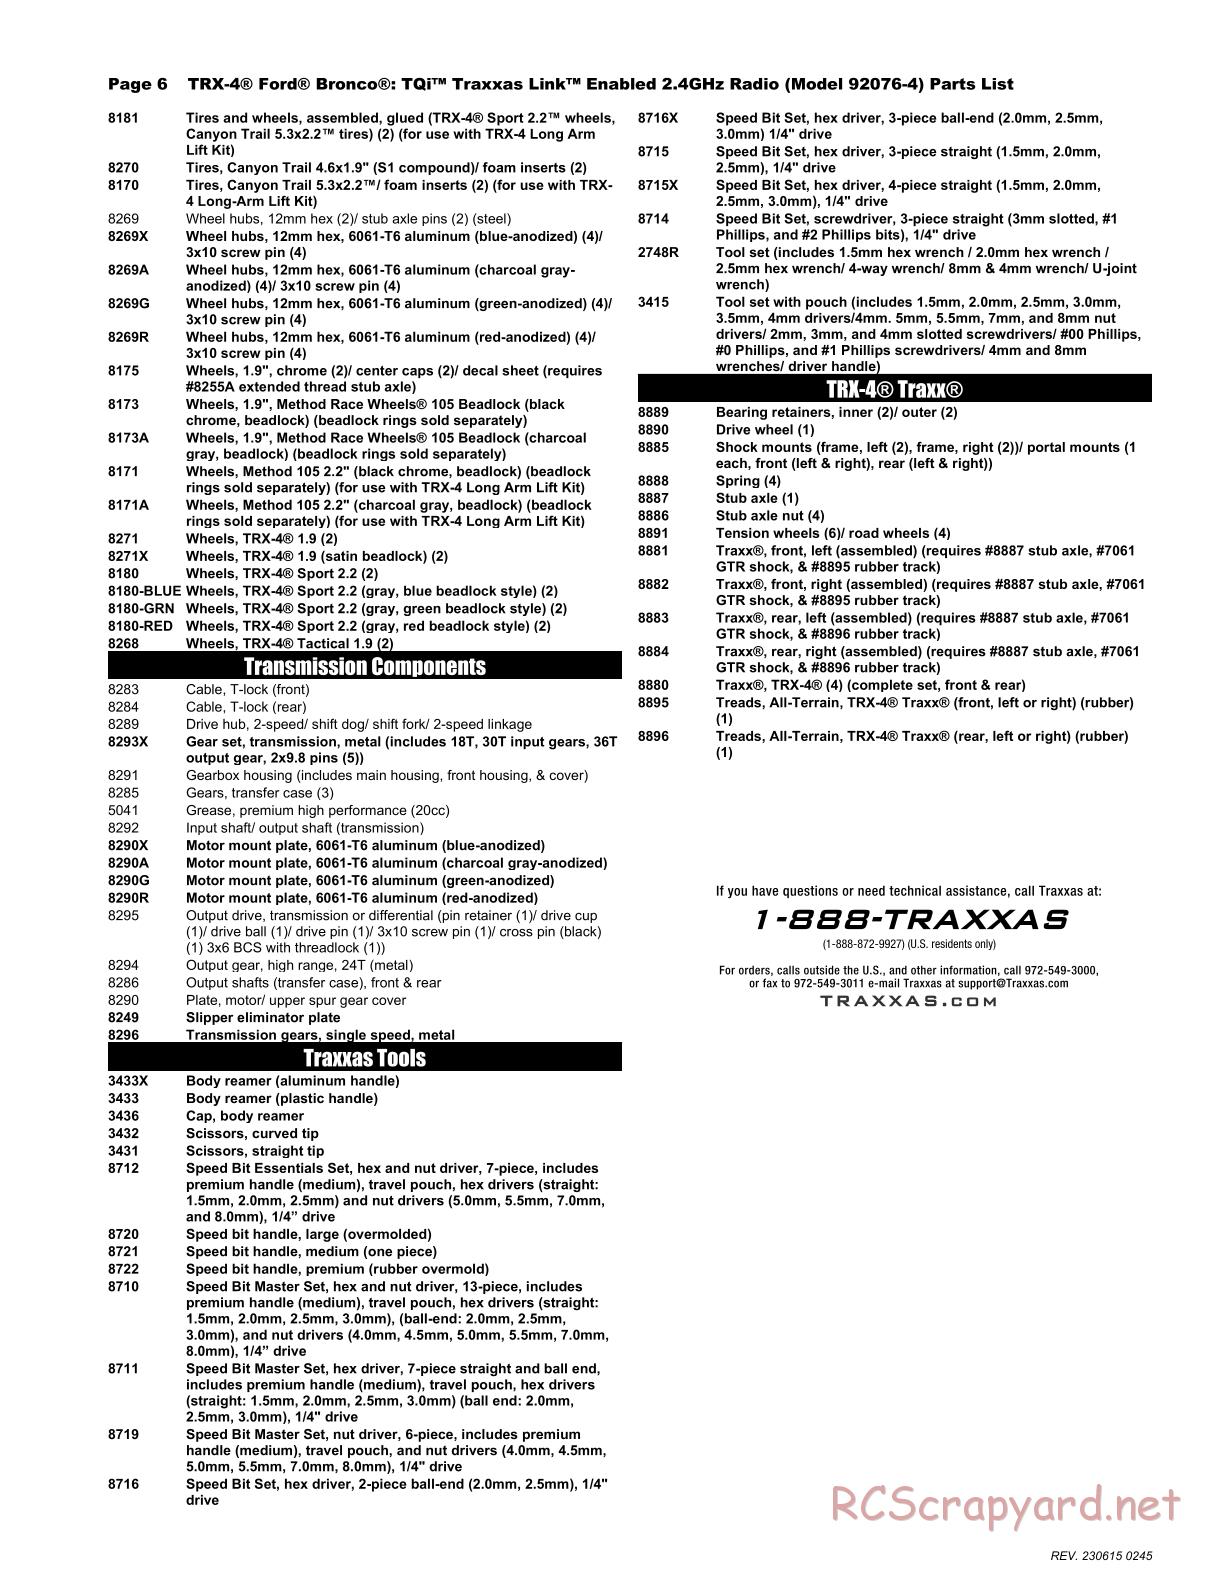 Traxxas - TRX-4 Ford Bronco (2021) - Parts List - Page 6